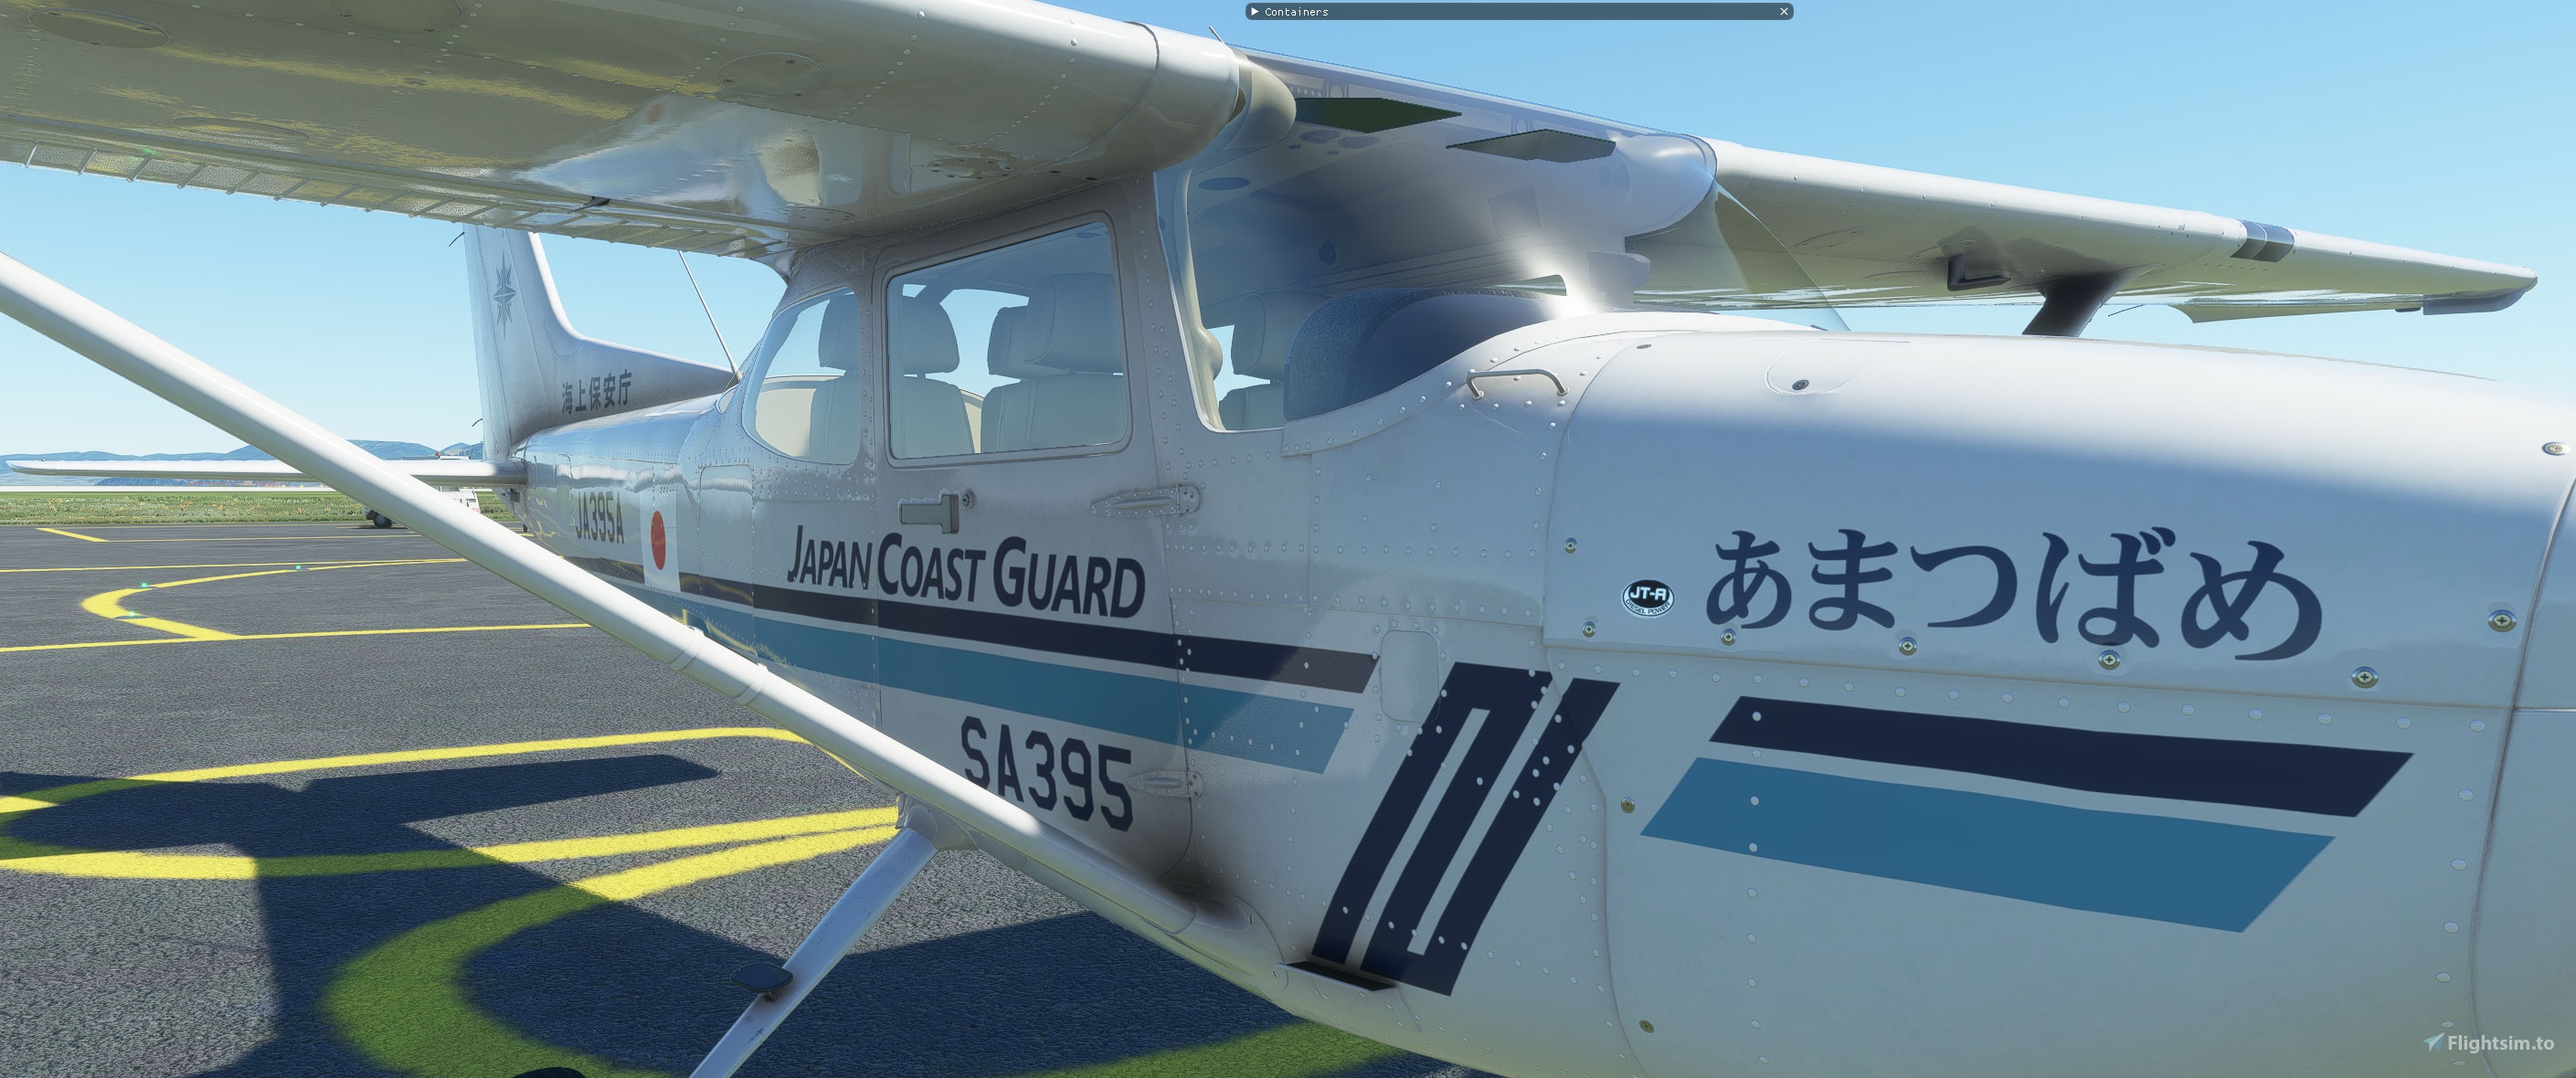 Cessna 172 (no wheel fairings) - Japan Coast Guard JA395A for 